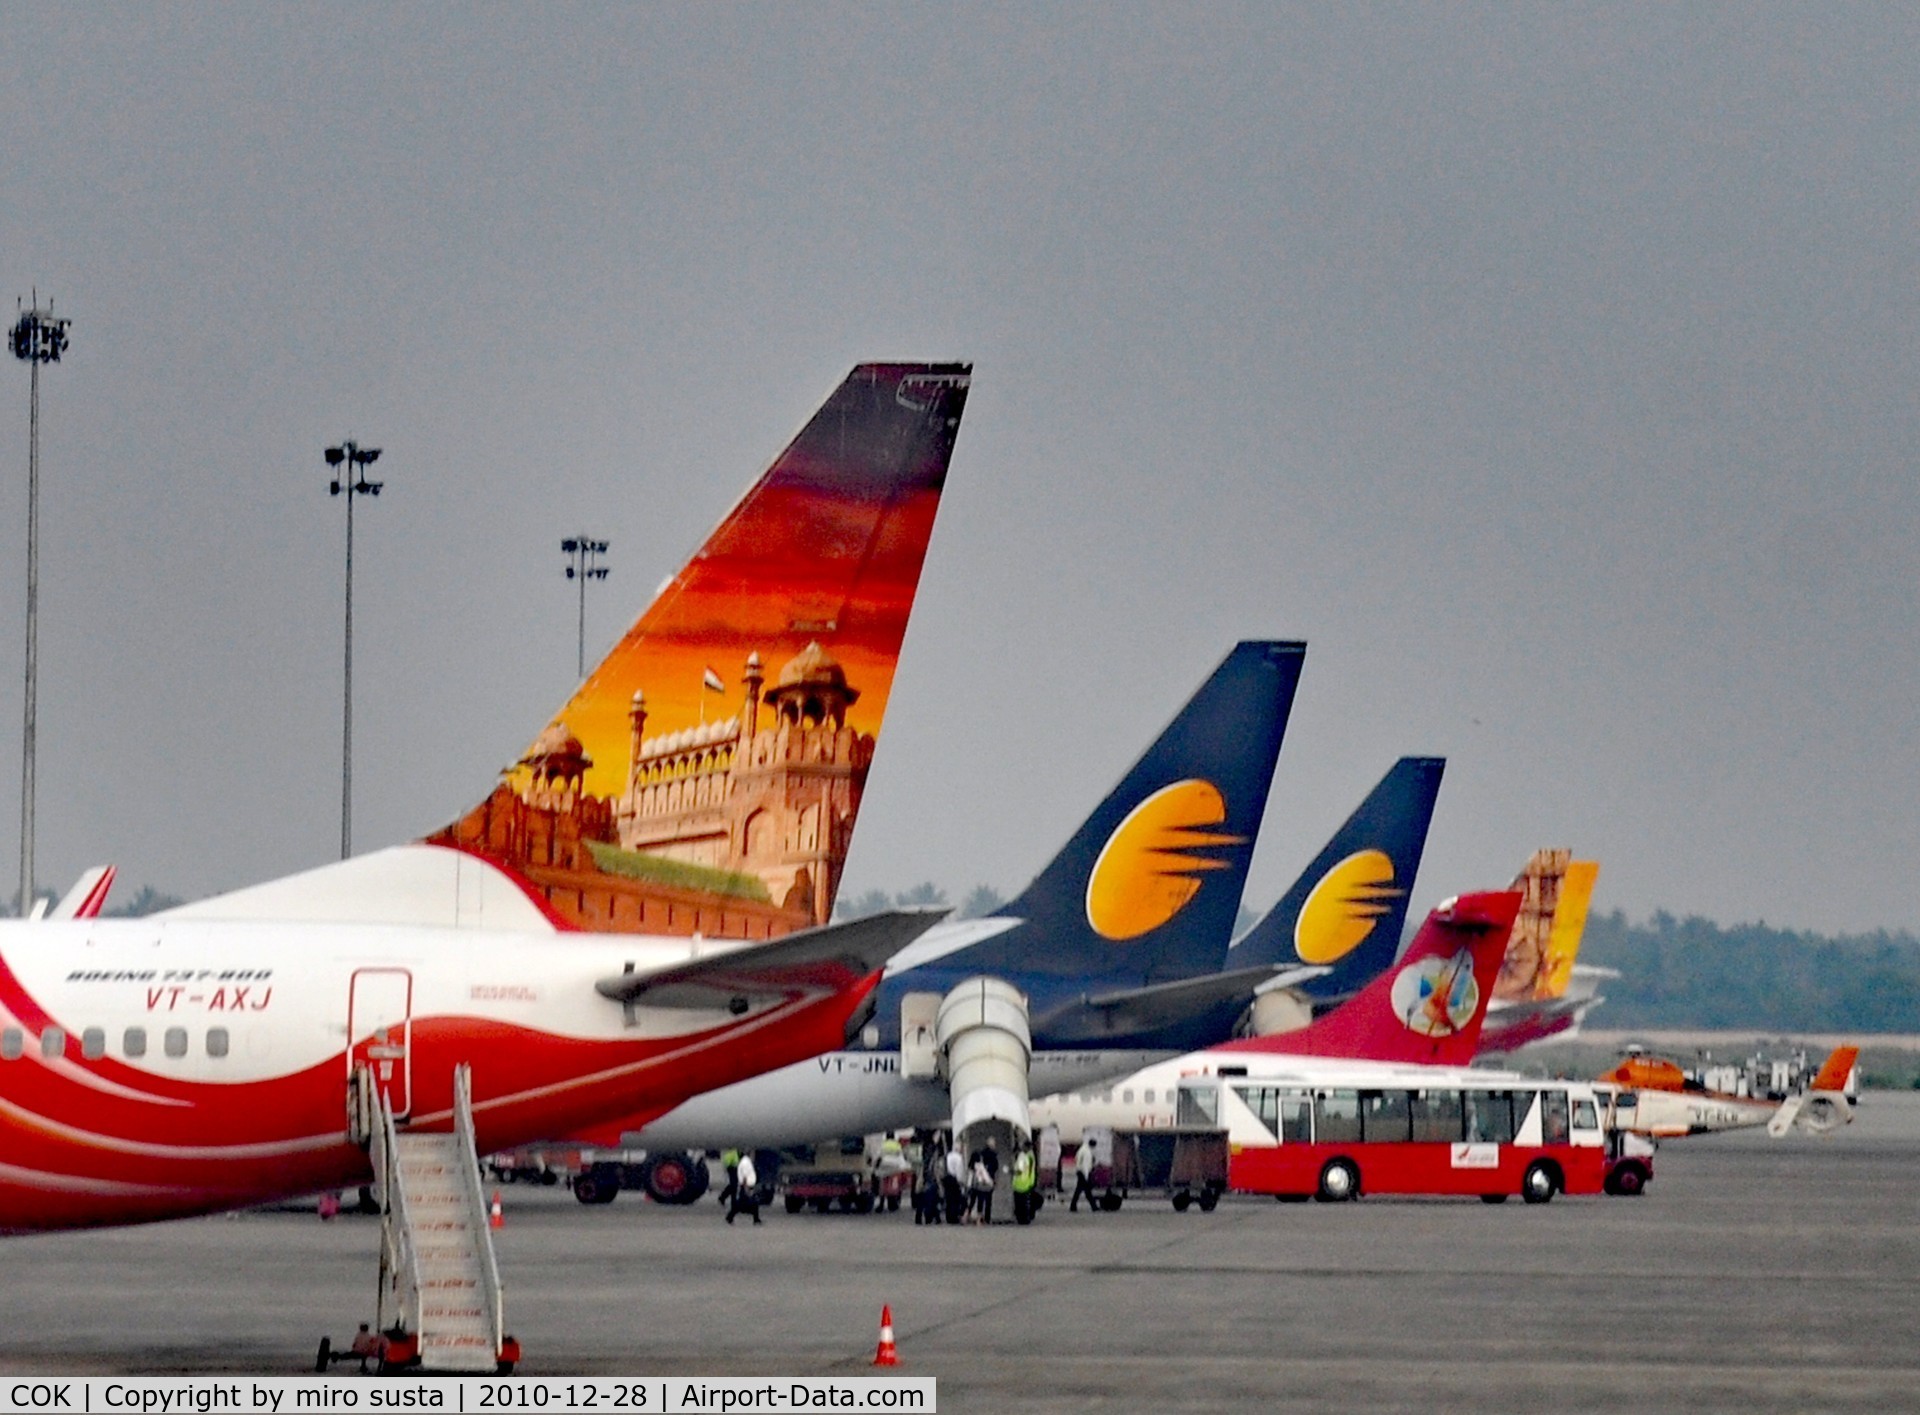 Cochin International Airport (Kochi Int'l), Kochi / Nedumbassery India (COK) - Air India Express & Jet air